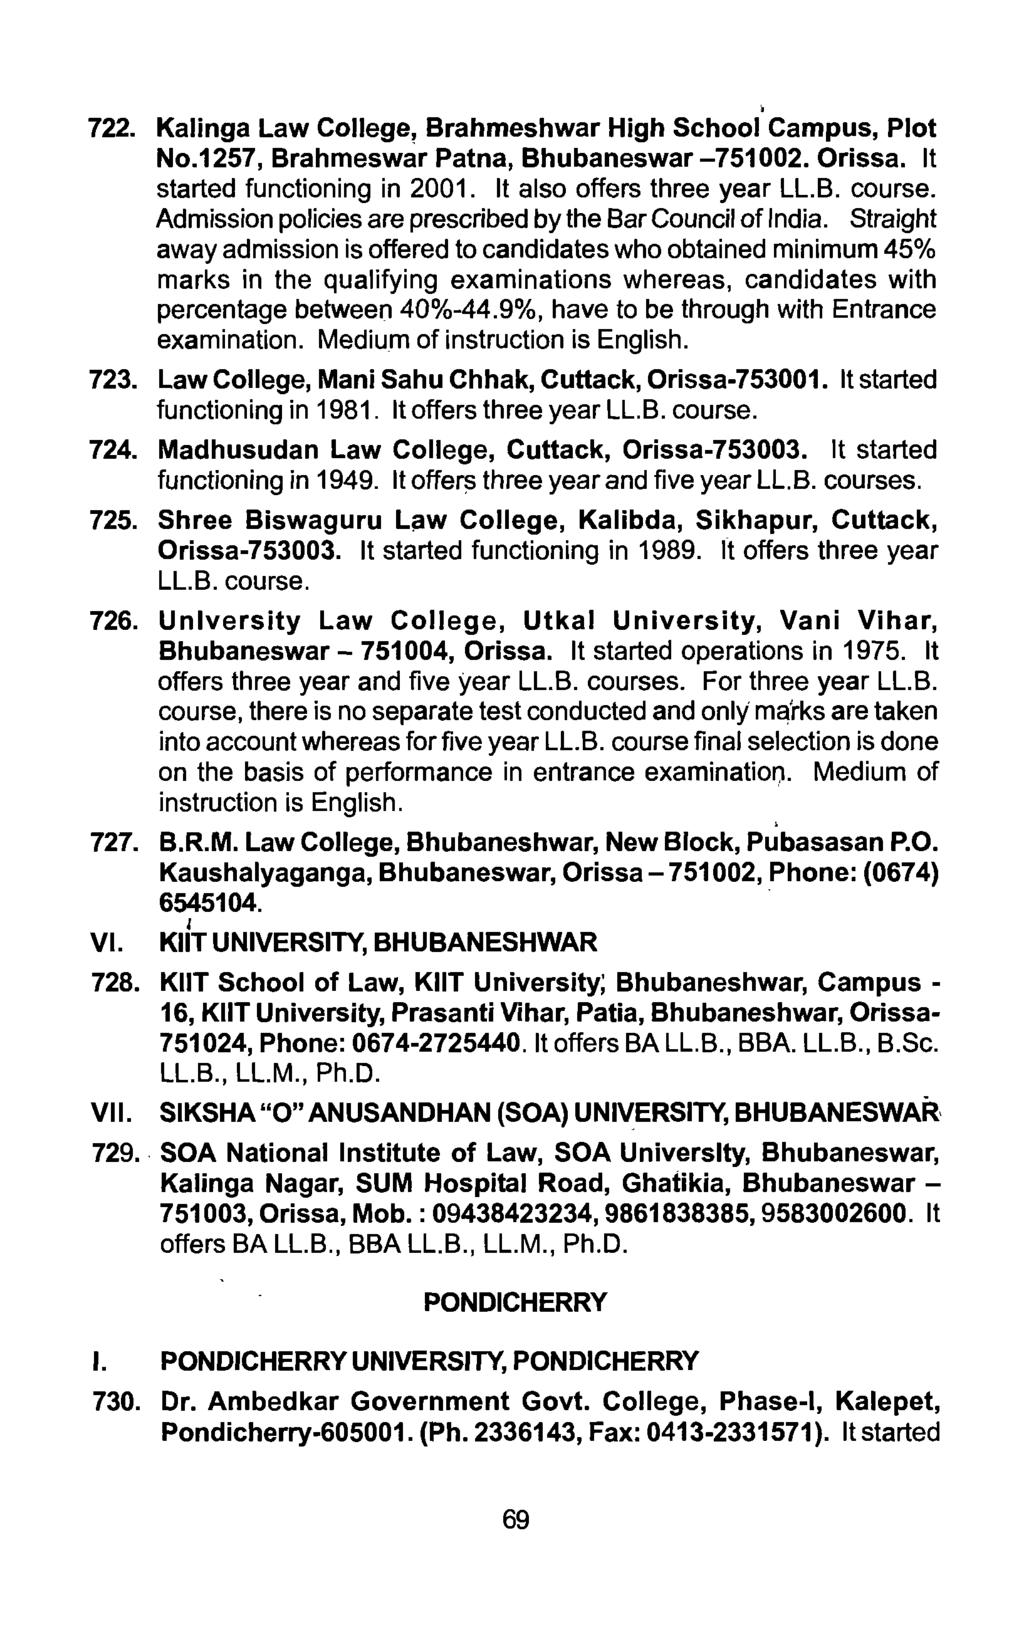 722. Kalinga Law College, Brahmeshwar High School Campus, Plot No.1257, Brahmeswar Patna, Bhubaneswar-751002. Orissa. It started functioning in 2001. It also offers three year LL.B. course.